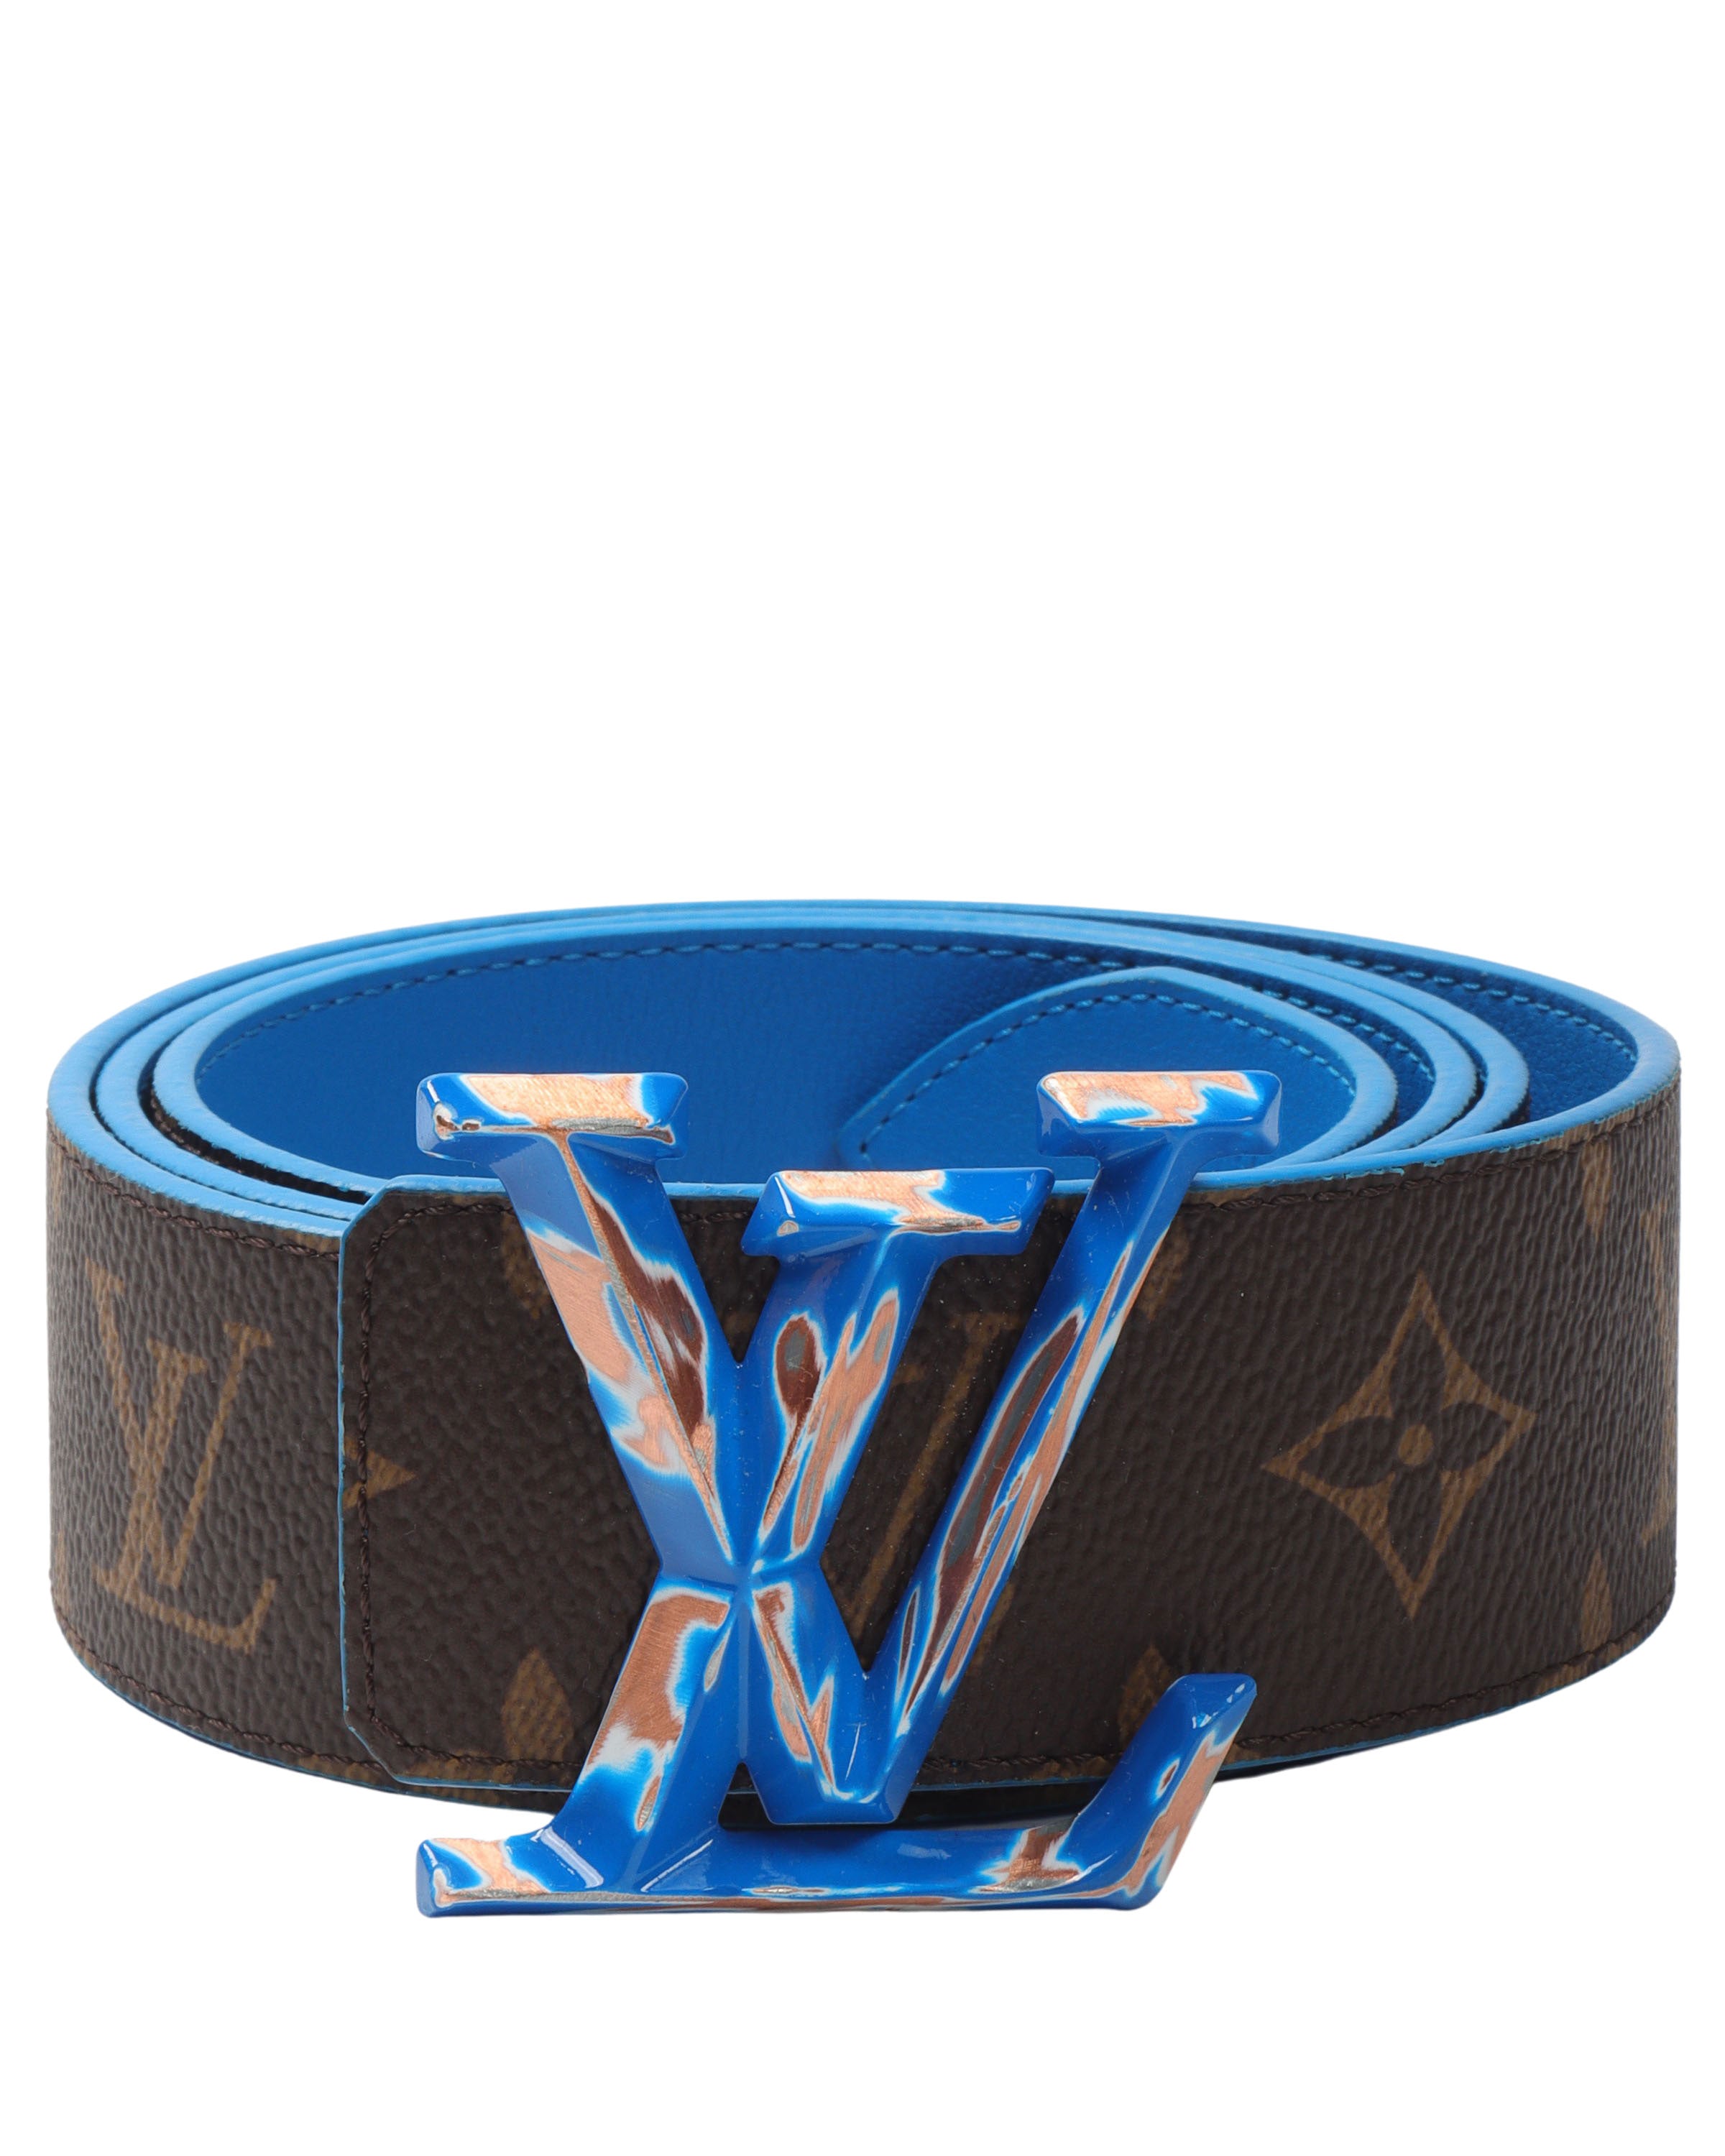 LV Limited Edition Reversible Belt